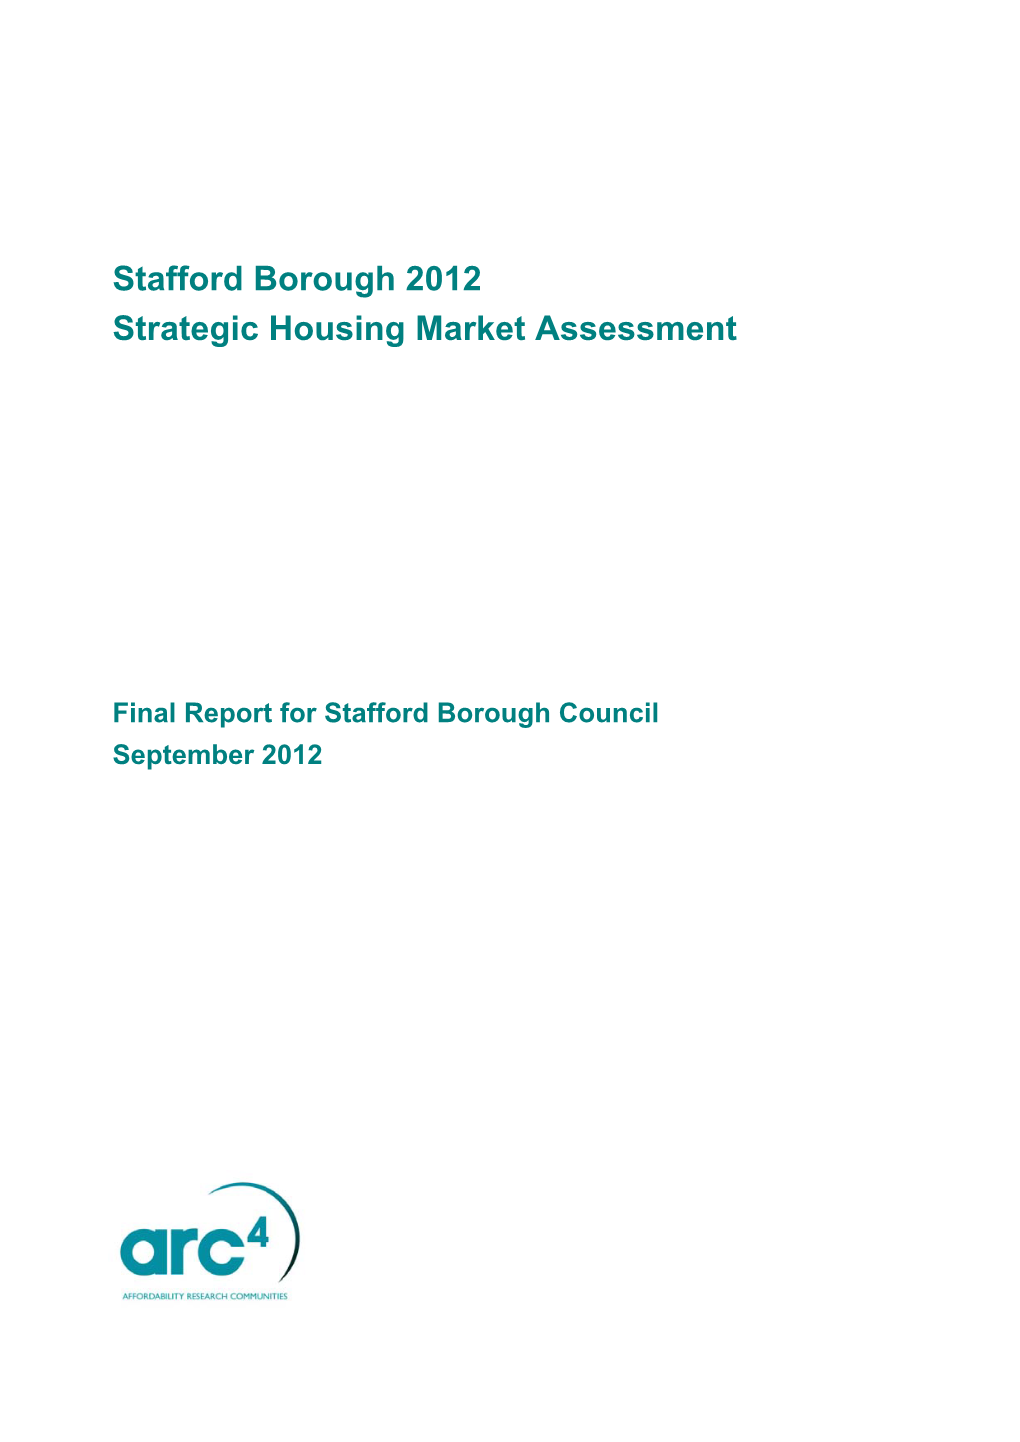 Stafford Borough 2012 Strategic Housing Market Assessment